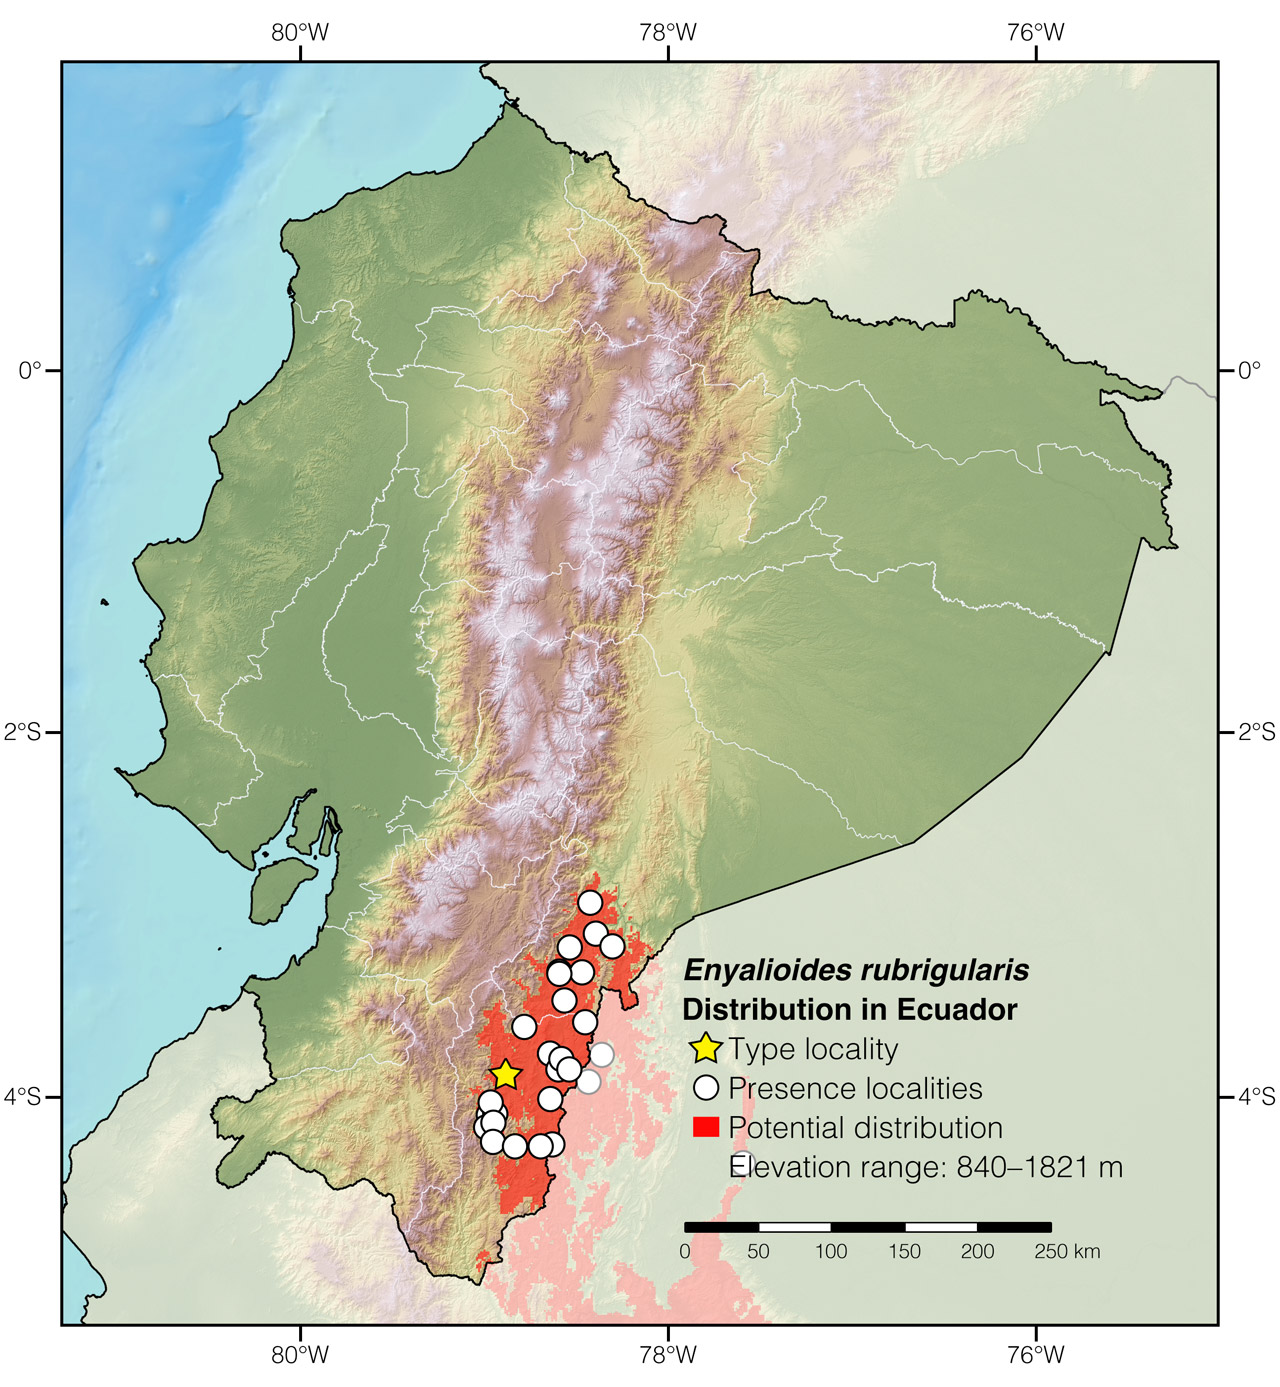 Distribution of Enyalioides rubrigularis in Ecuador